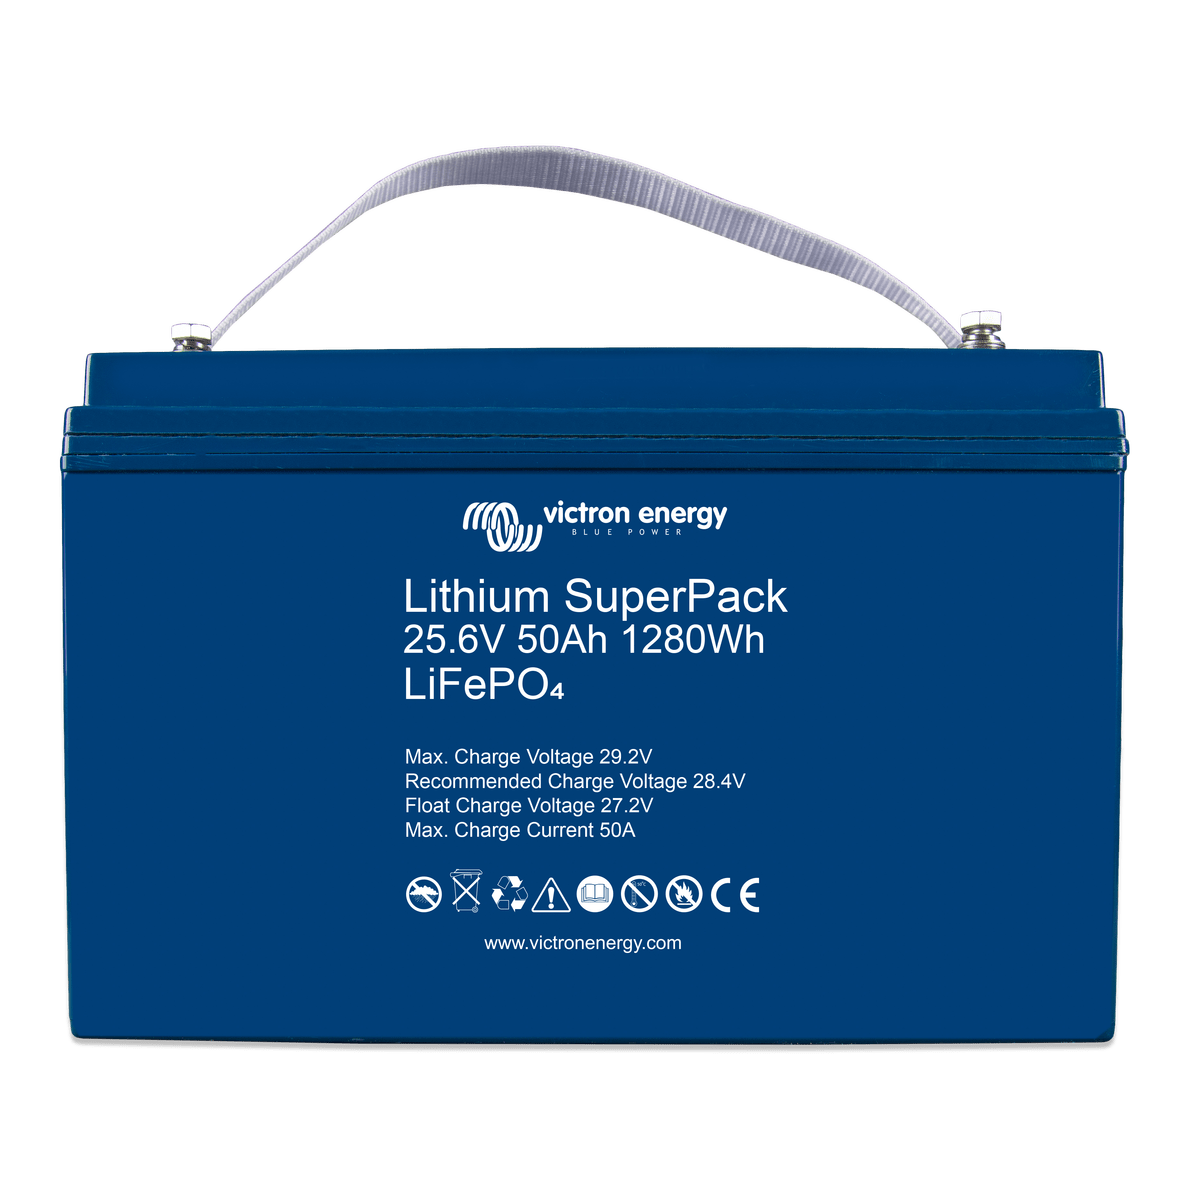 Lithium SuperPack 25,6V/50Ah (M8)